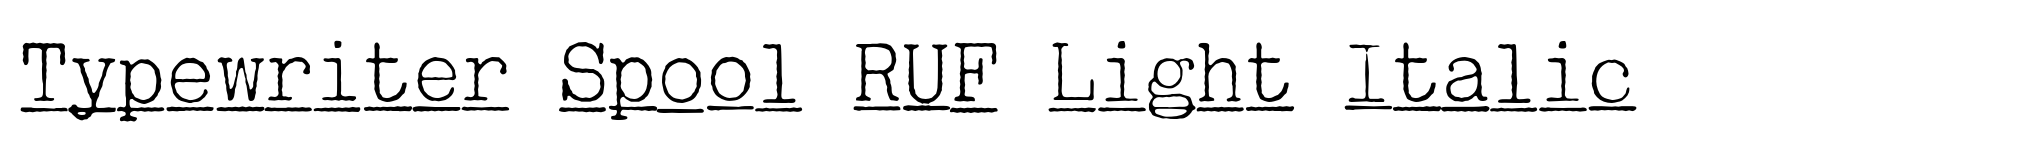 Typewriter Spool RUF Light Italic image